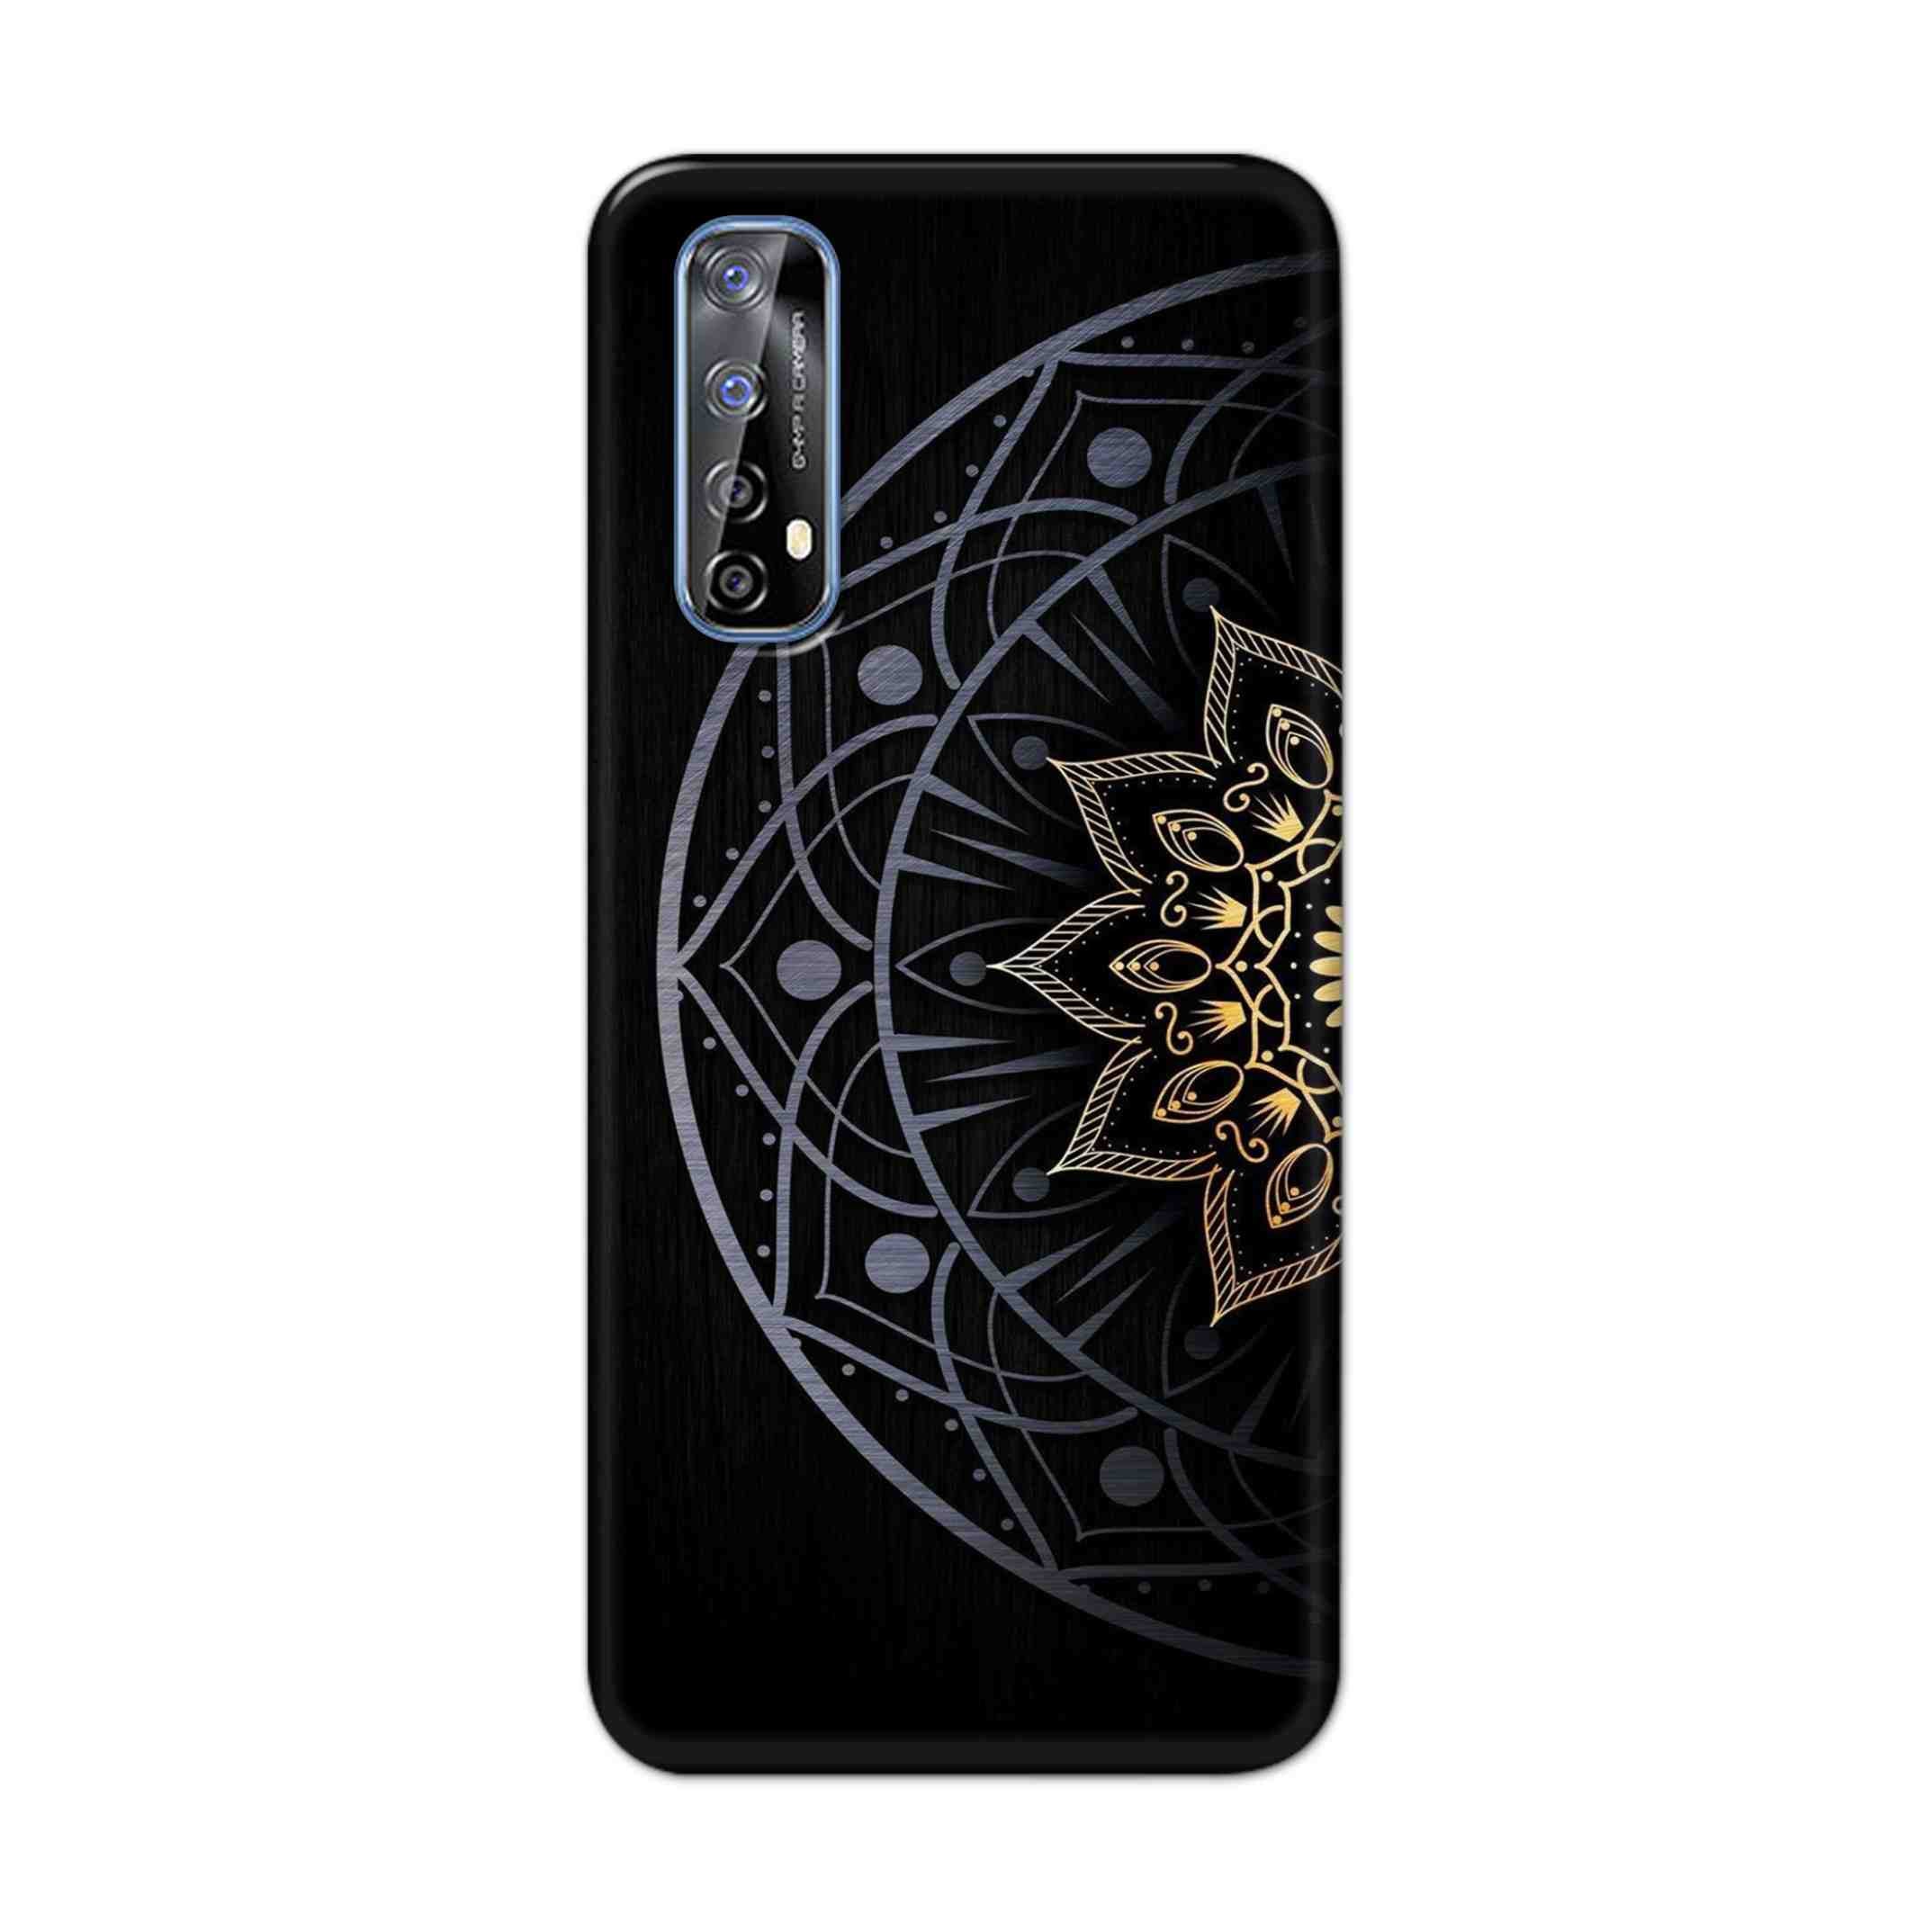 Buy Psychedelic Mandalas Hard Back Mobile Phone Case Cover For Realme 7 Online